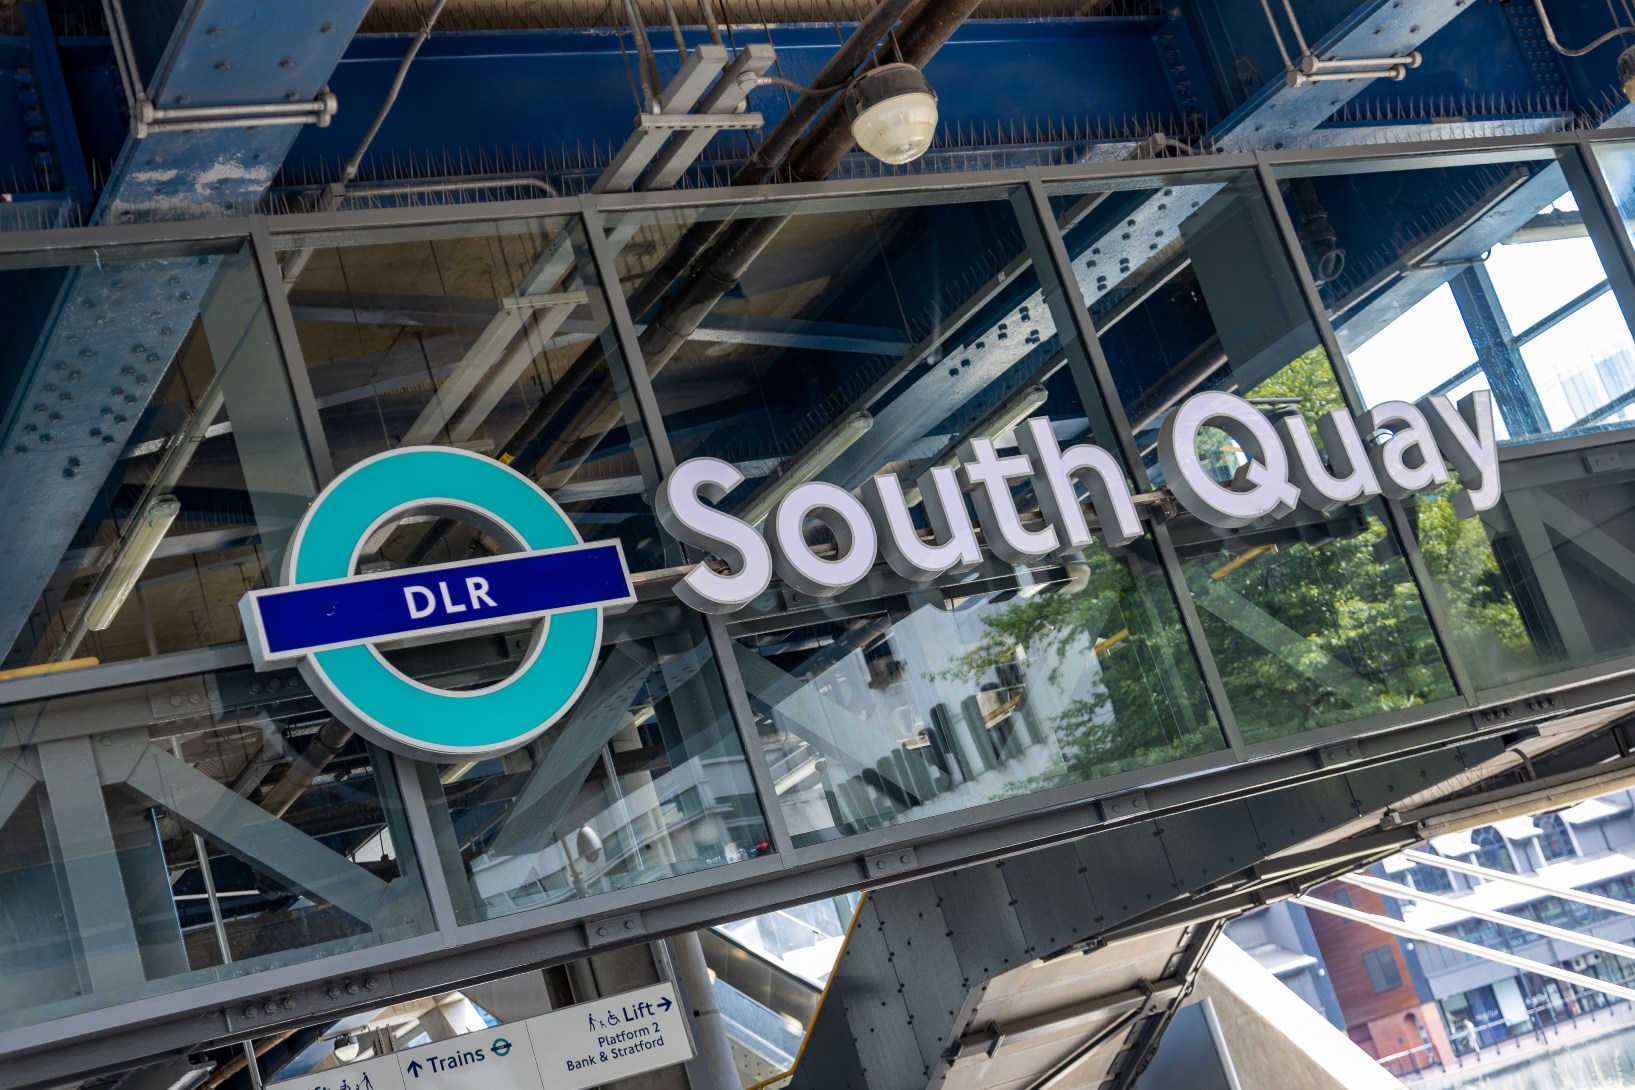 South Quay DLR station near Hampton Tower, Canary Wharf